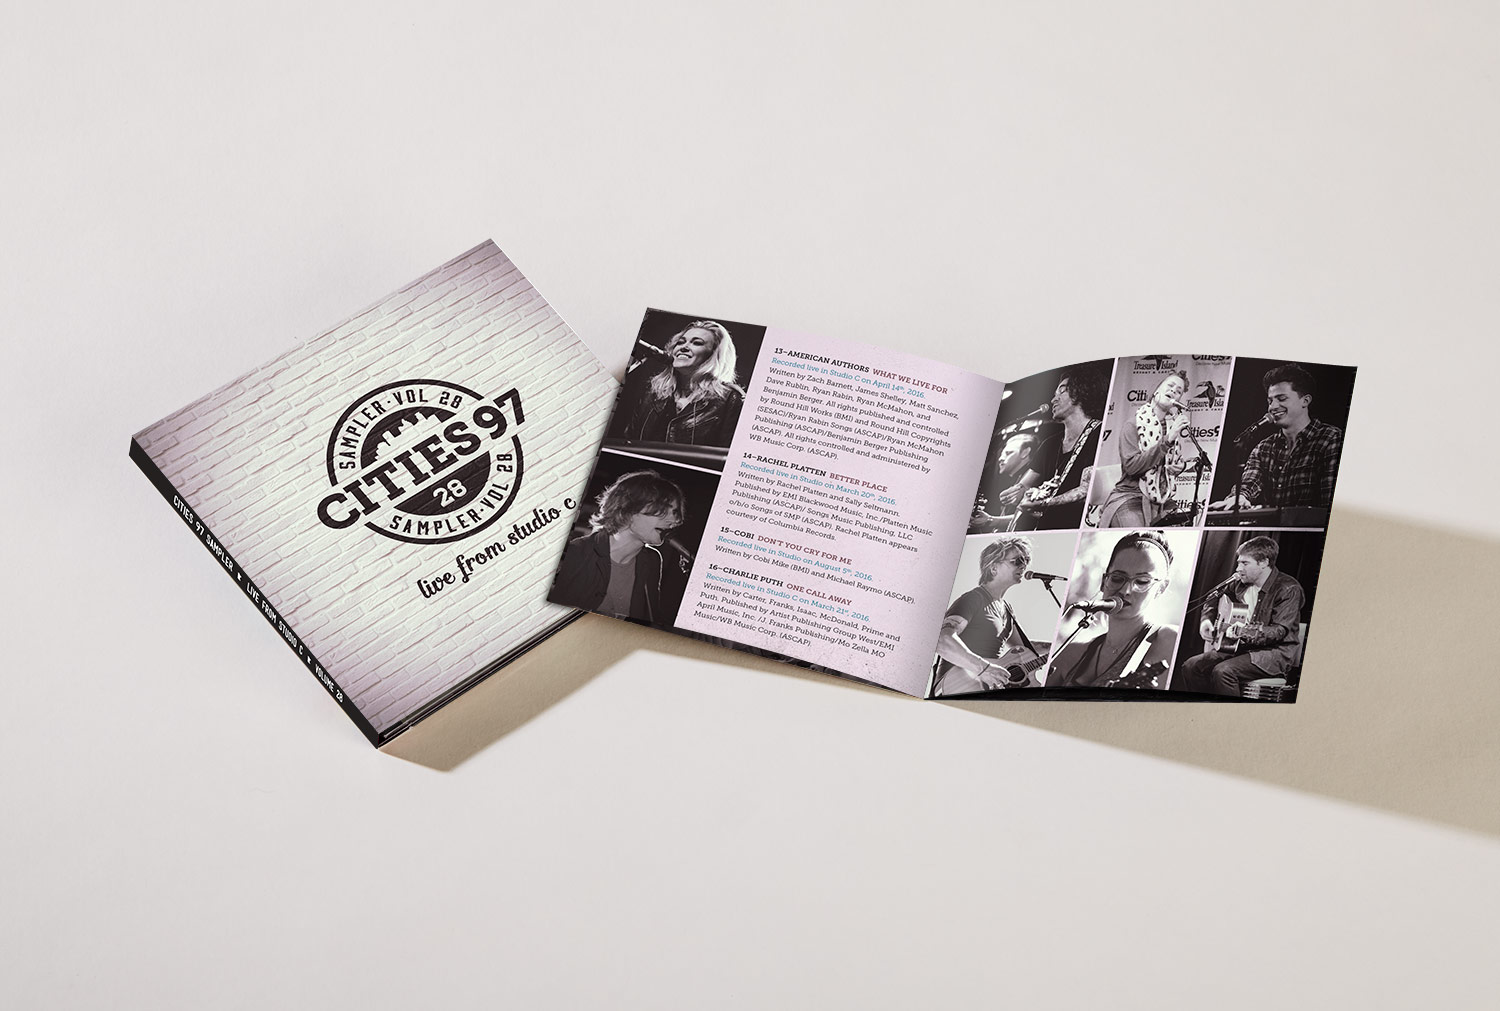 Cities 97 Sampler Volume 28 Album Booklet and Case